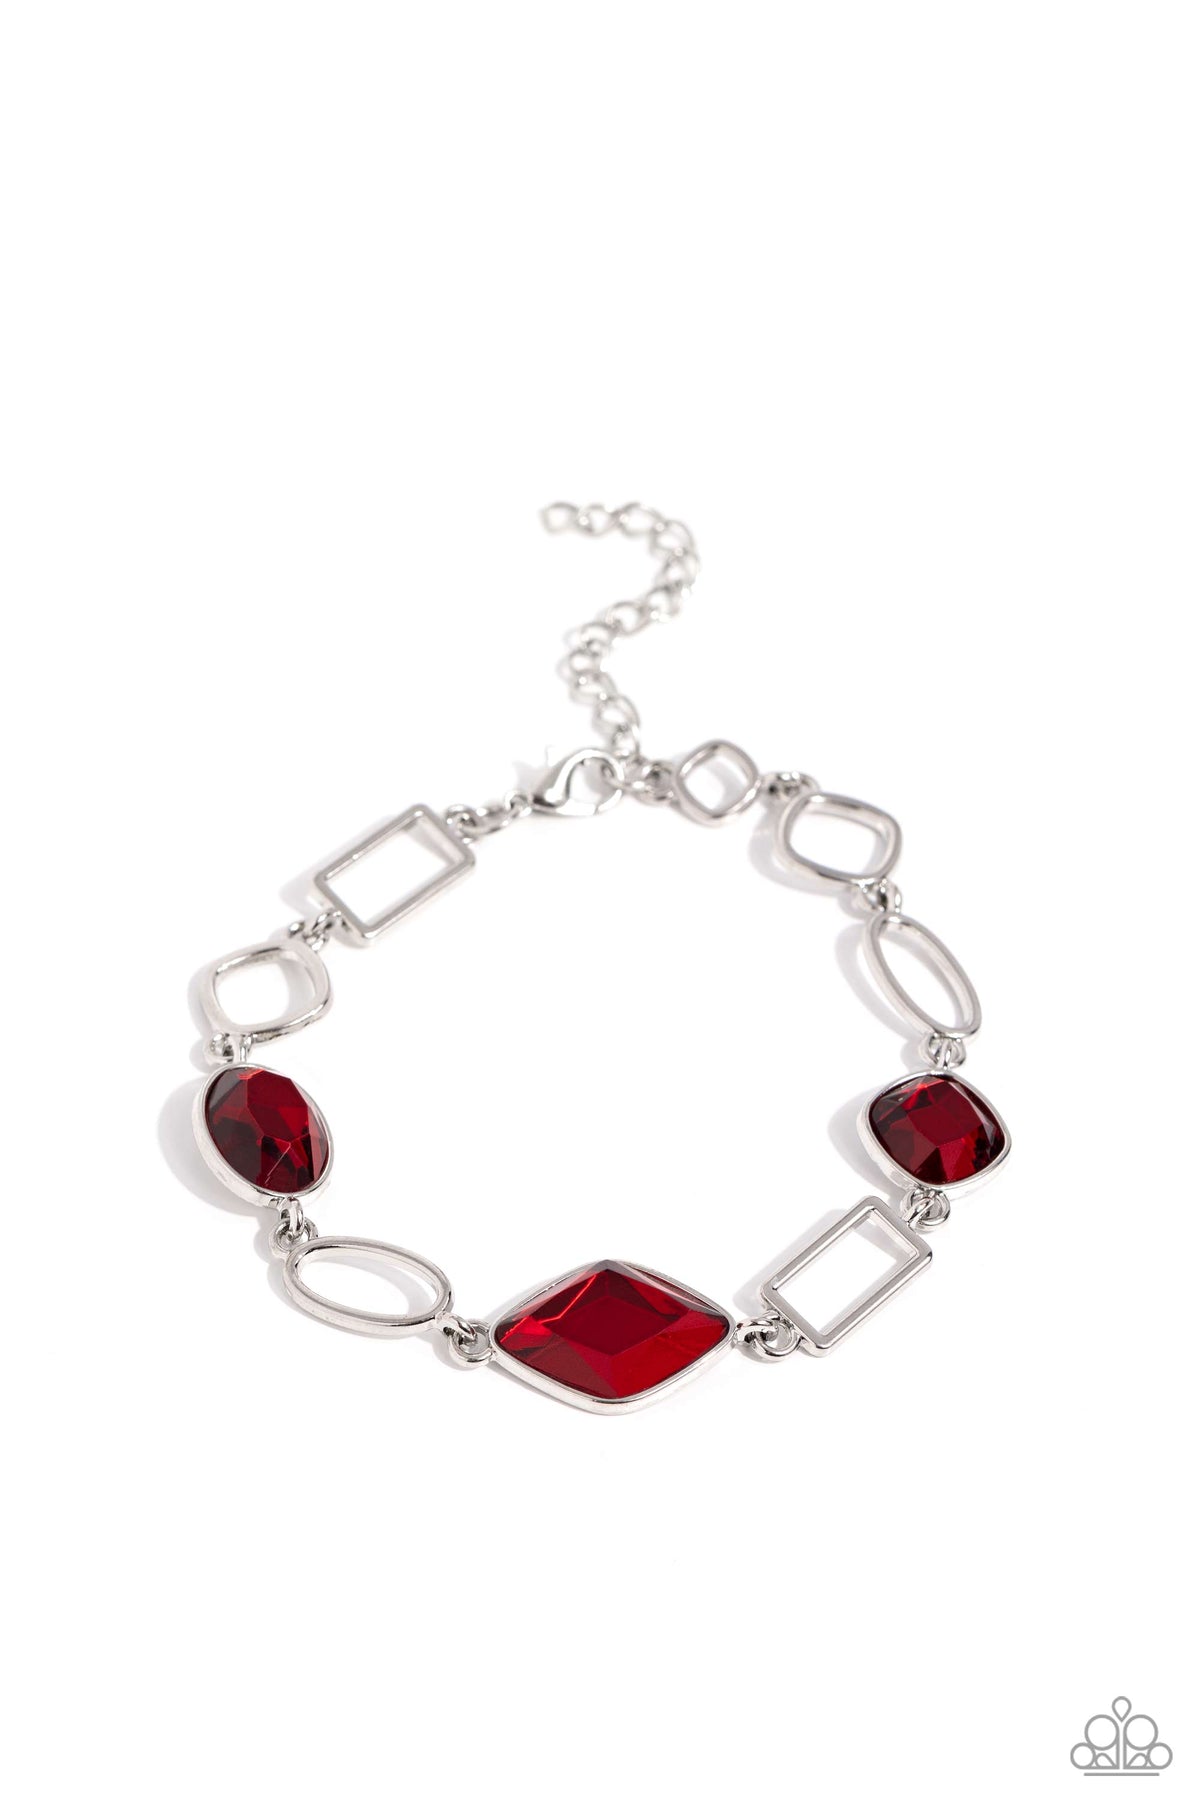 Dazzle for Days Red Rhinestone Bracelet - Paparazzi Accessories- lightbox - CarasShop.com - $5 Jewelry by Cara Jewels